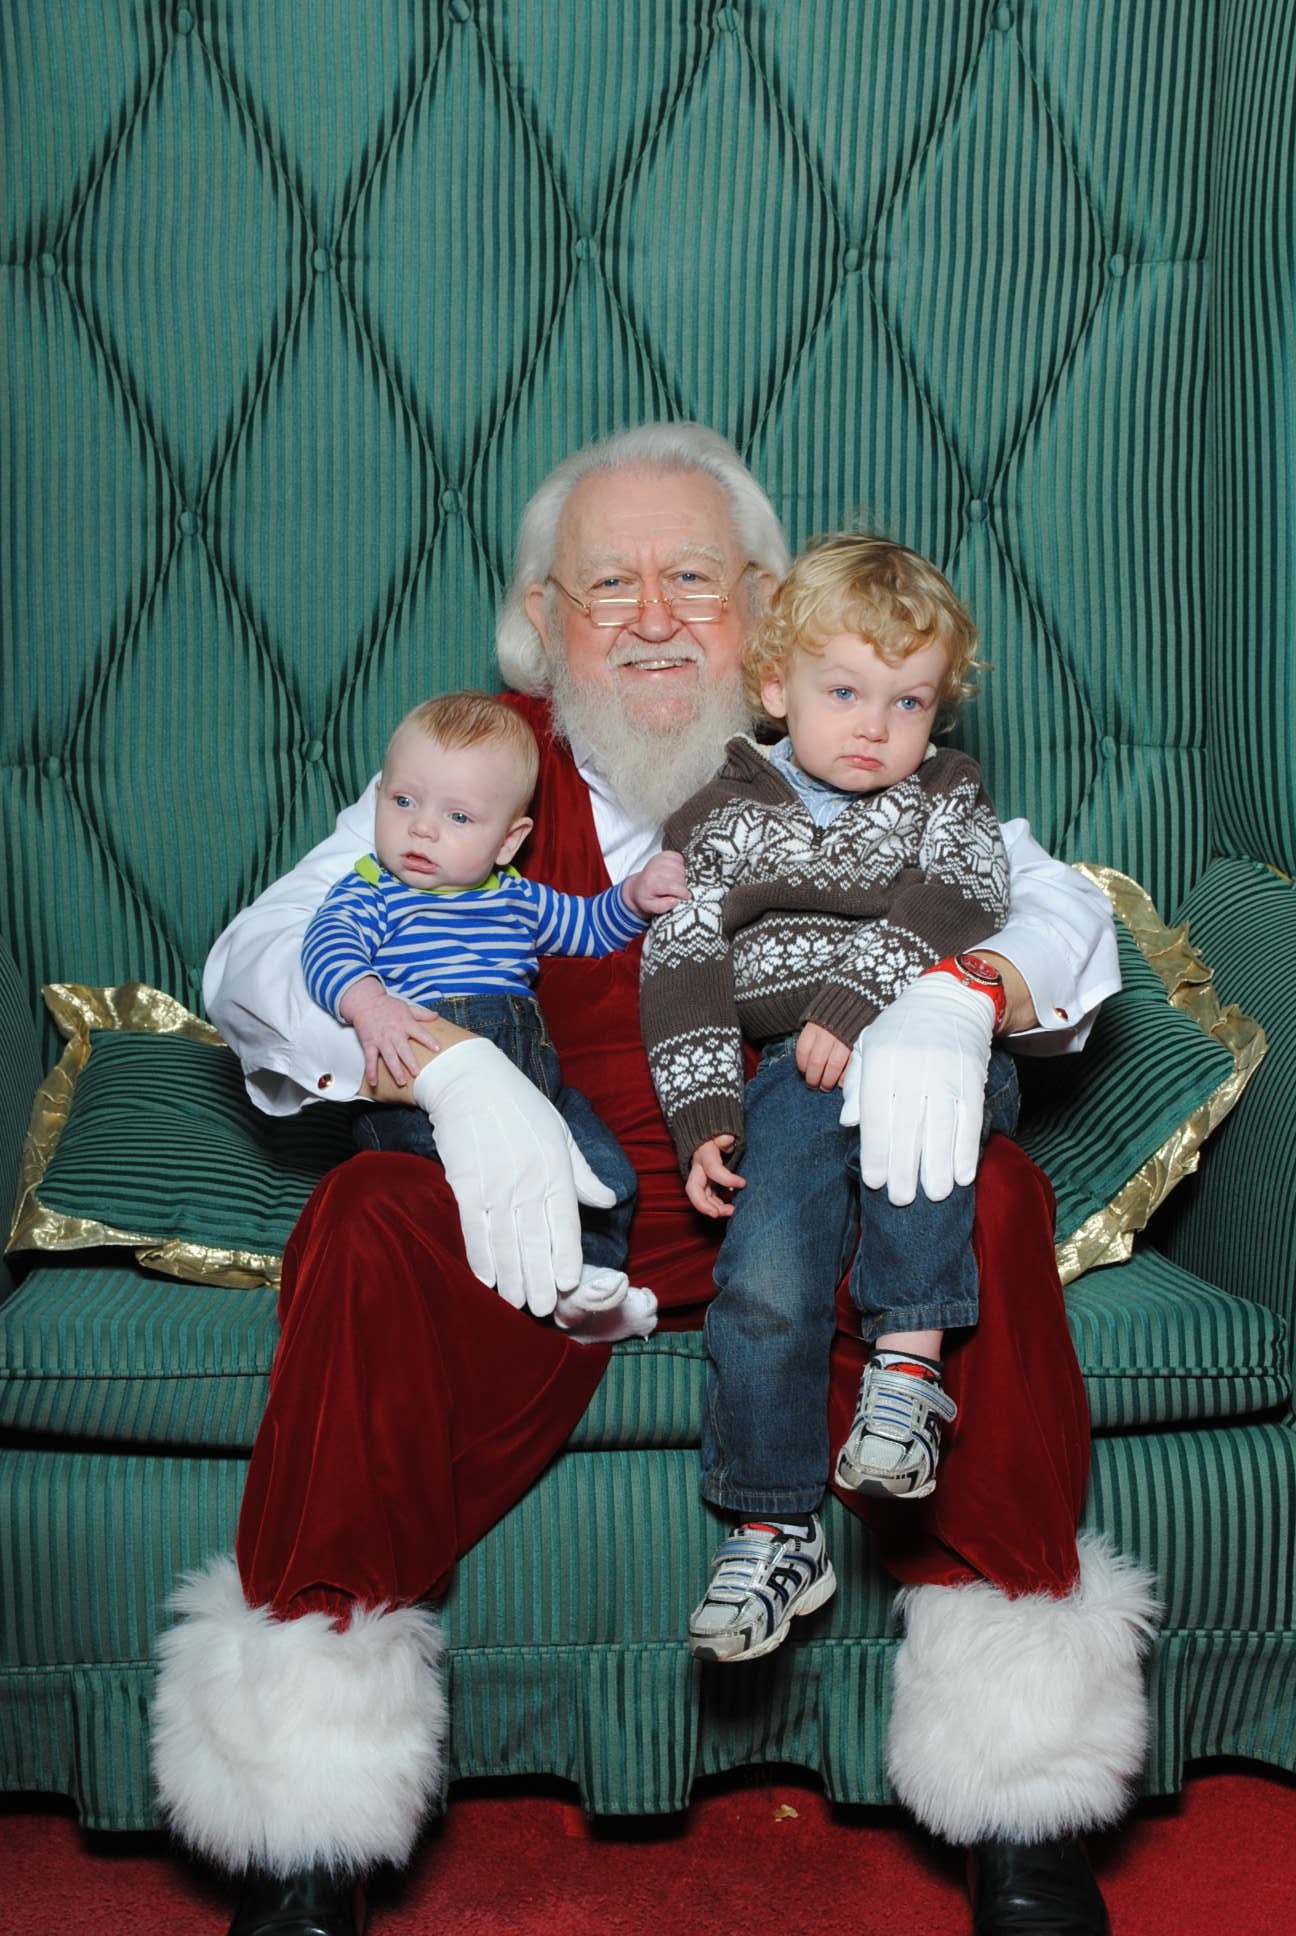 Benjamin and Samuel with Santa